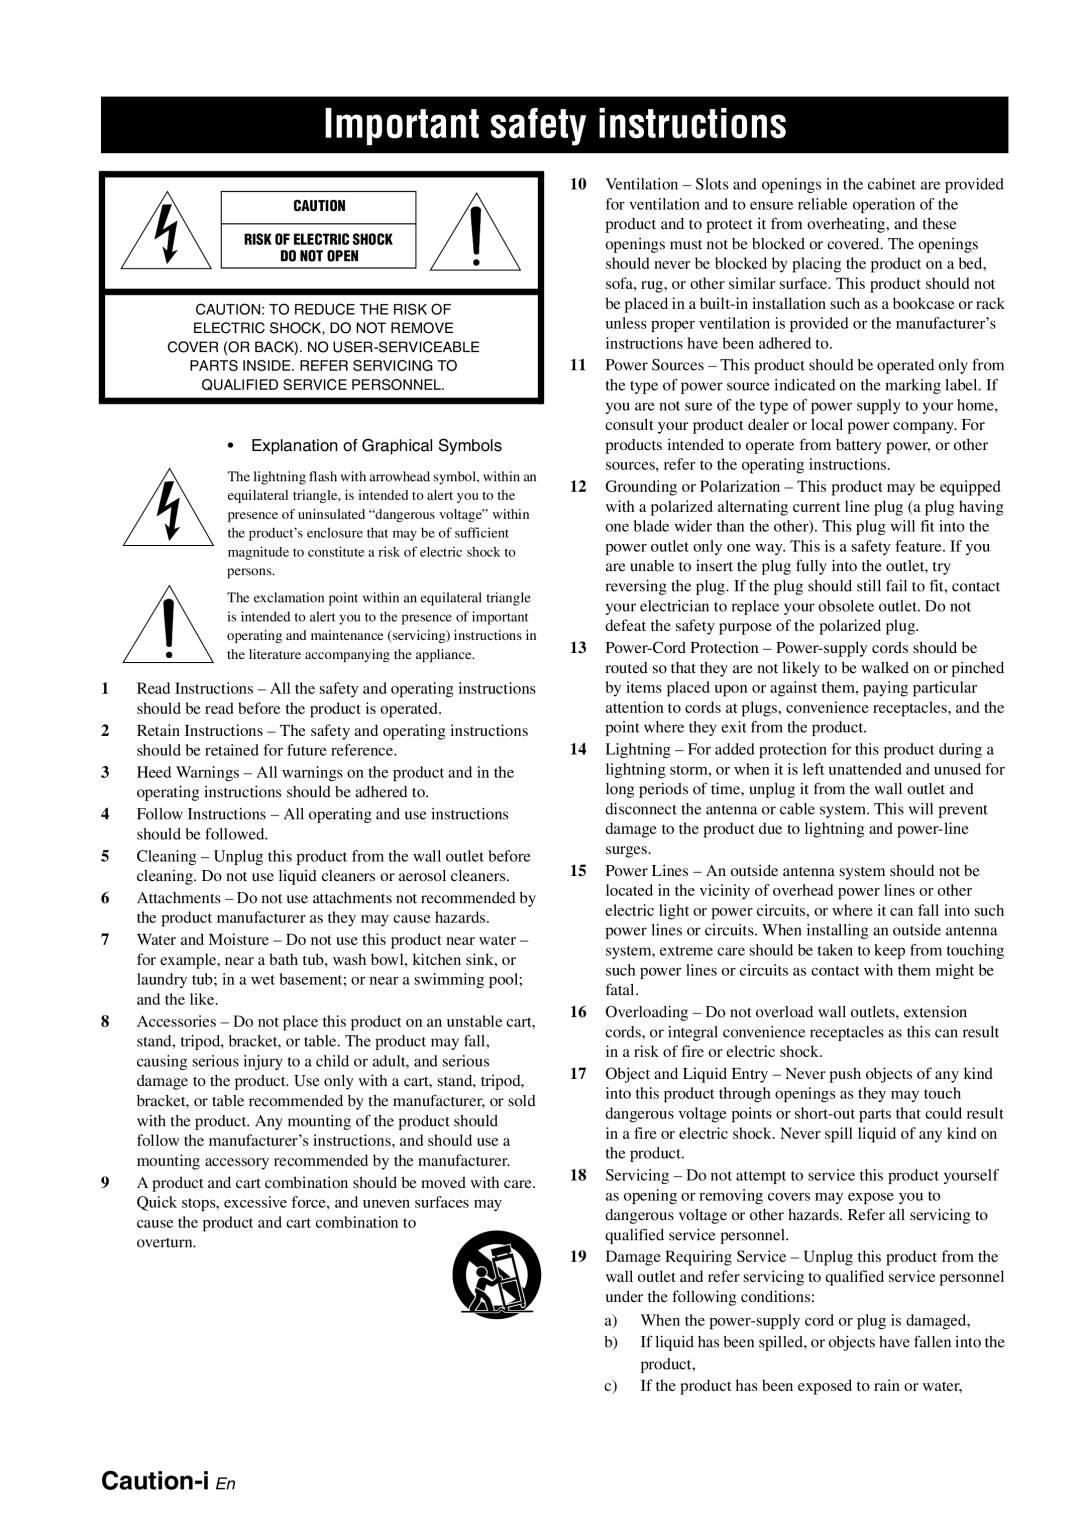 Yamaha RX-V3800 owner manual Caution-i En, Important safety instructions 